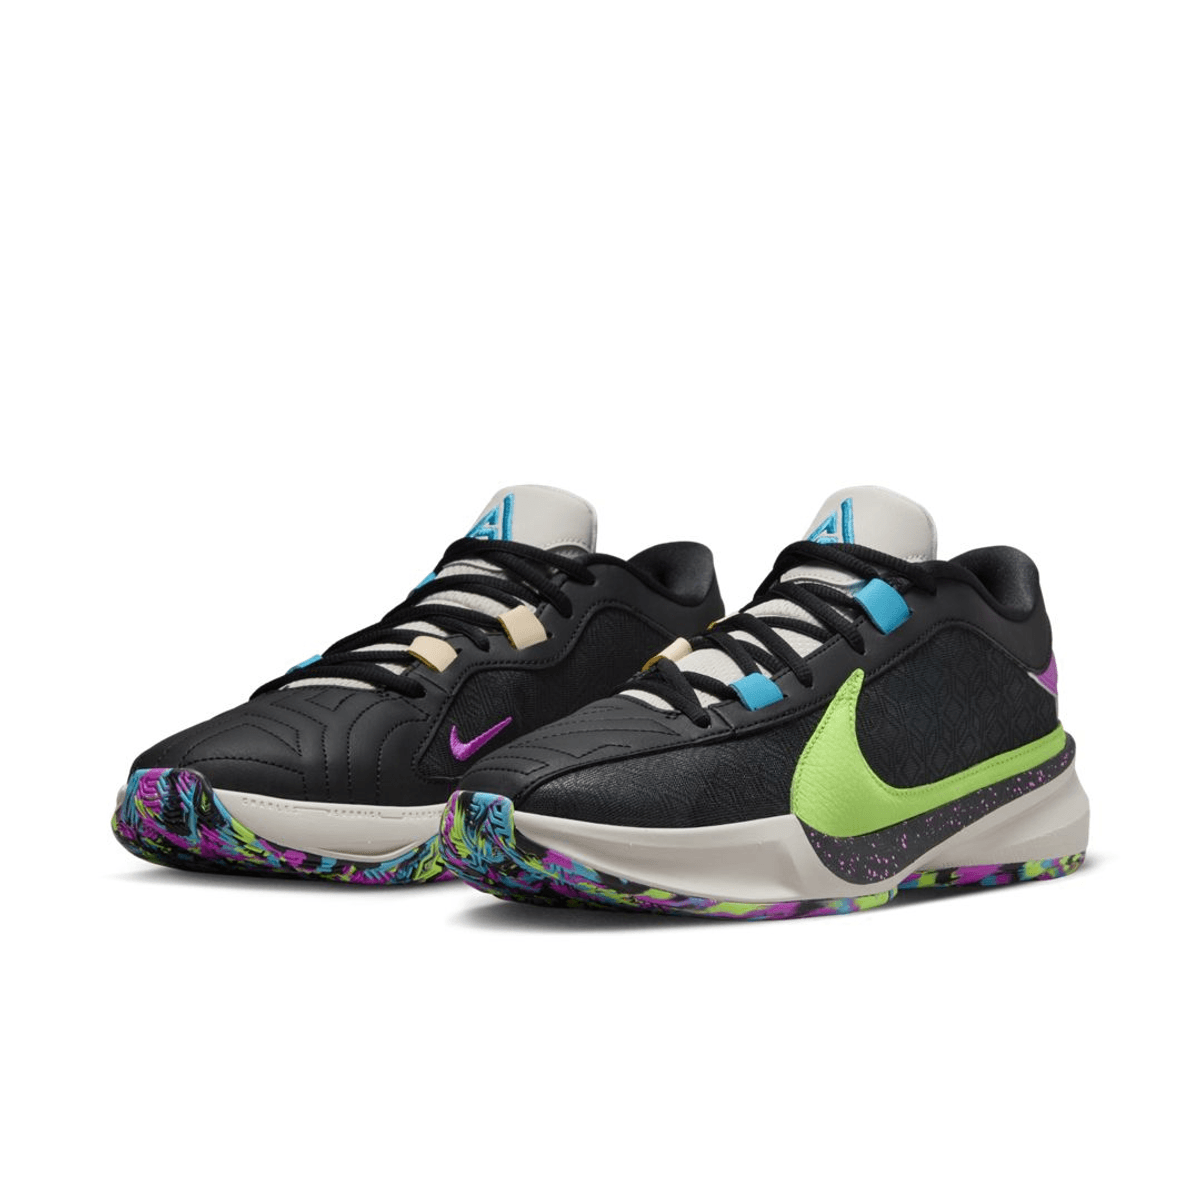 Nike Zoom Freak 5 "Multicolor" Has Confetti In Their Soles, Literally